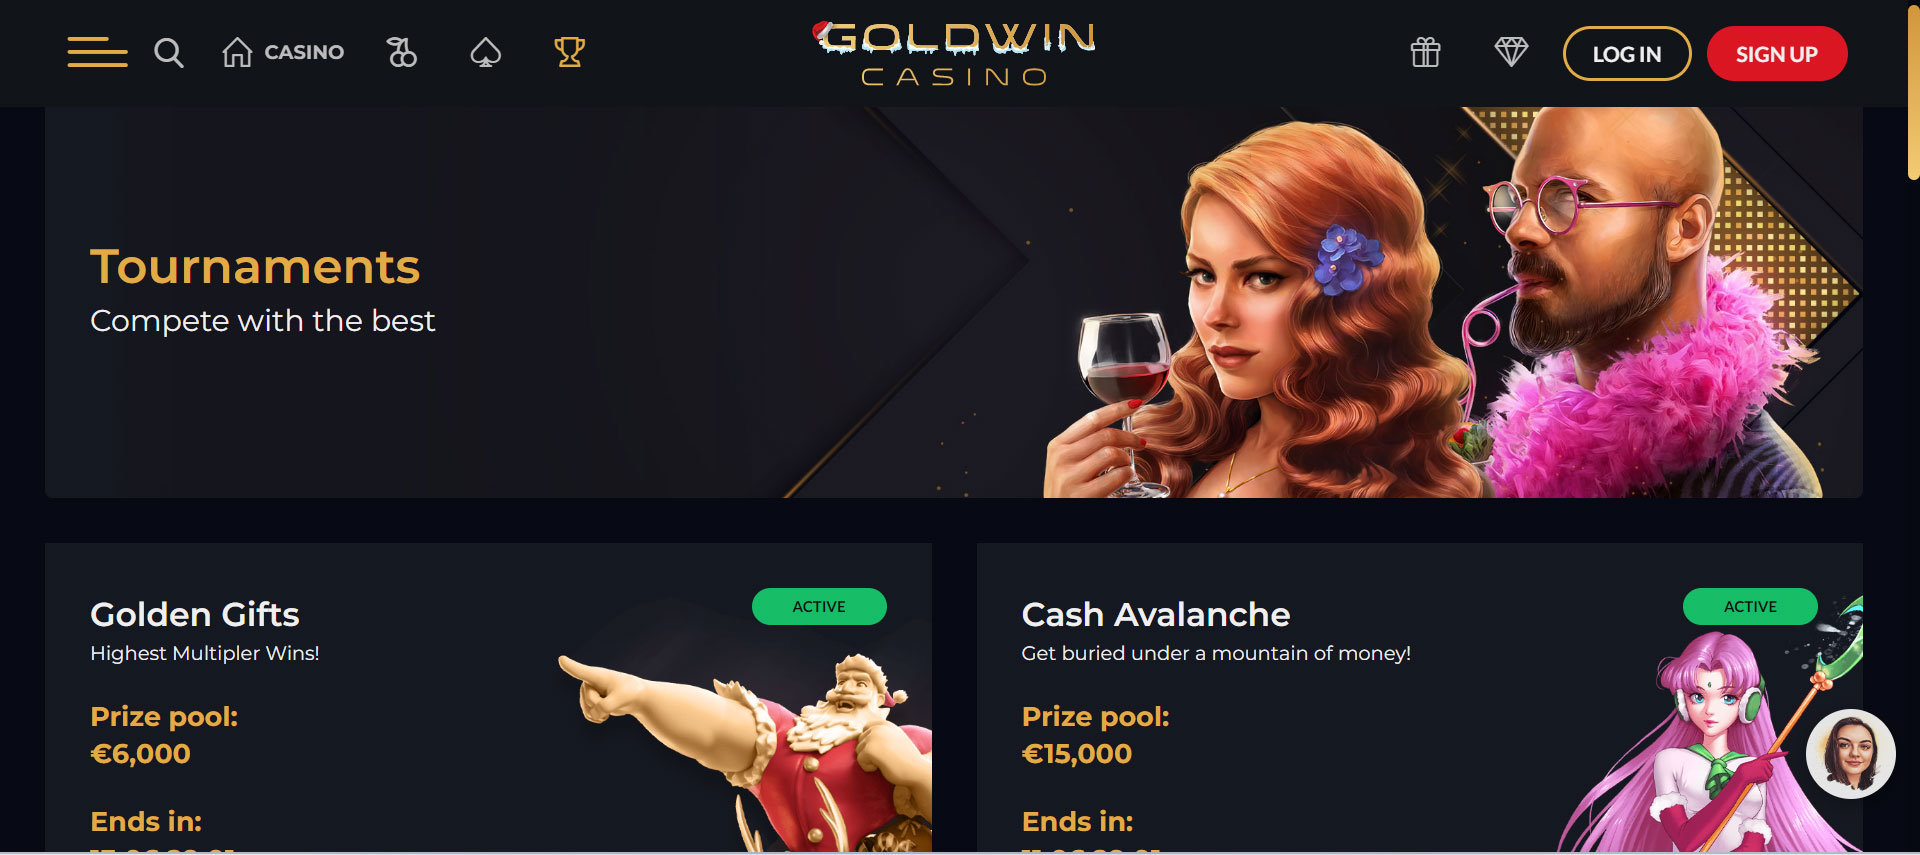 GoldWin Casino Tournaments